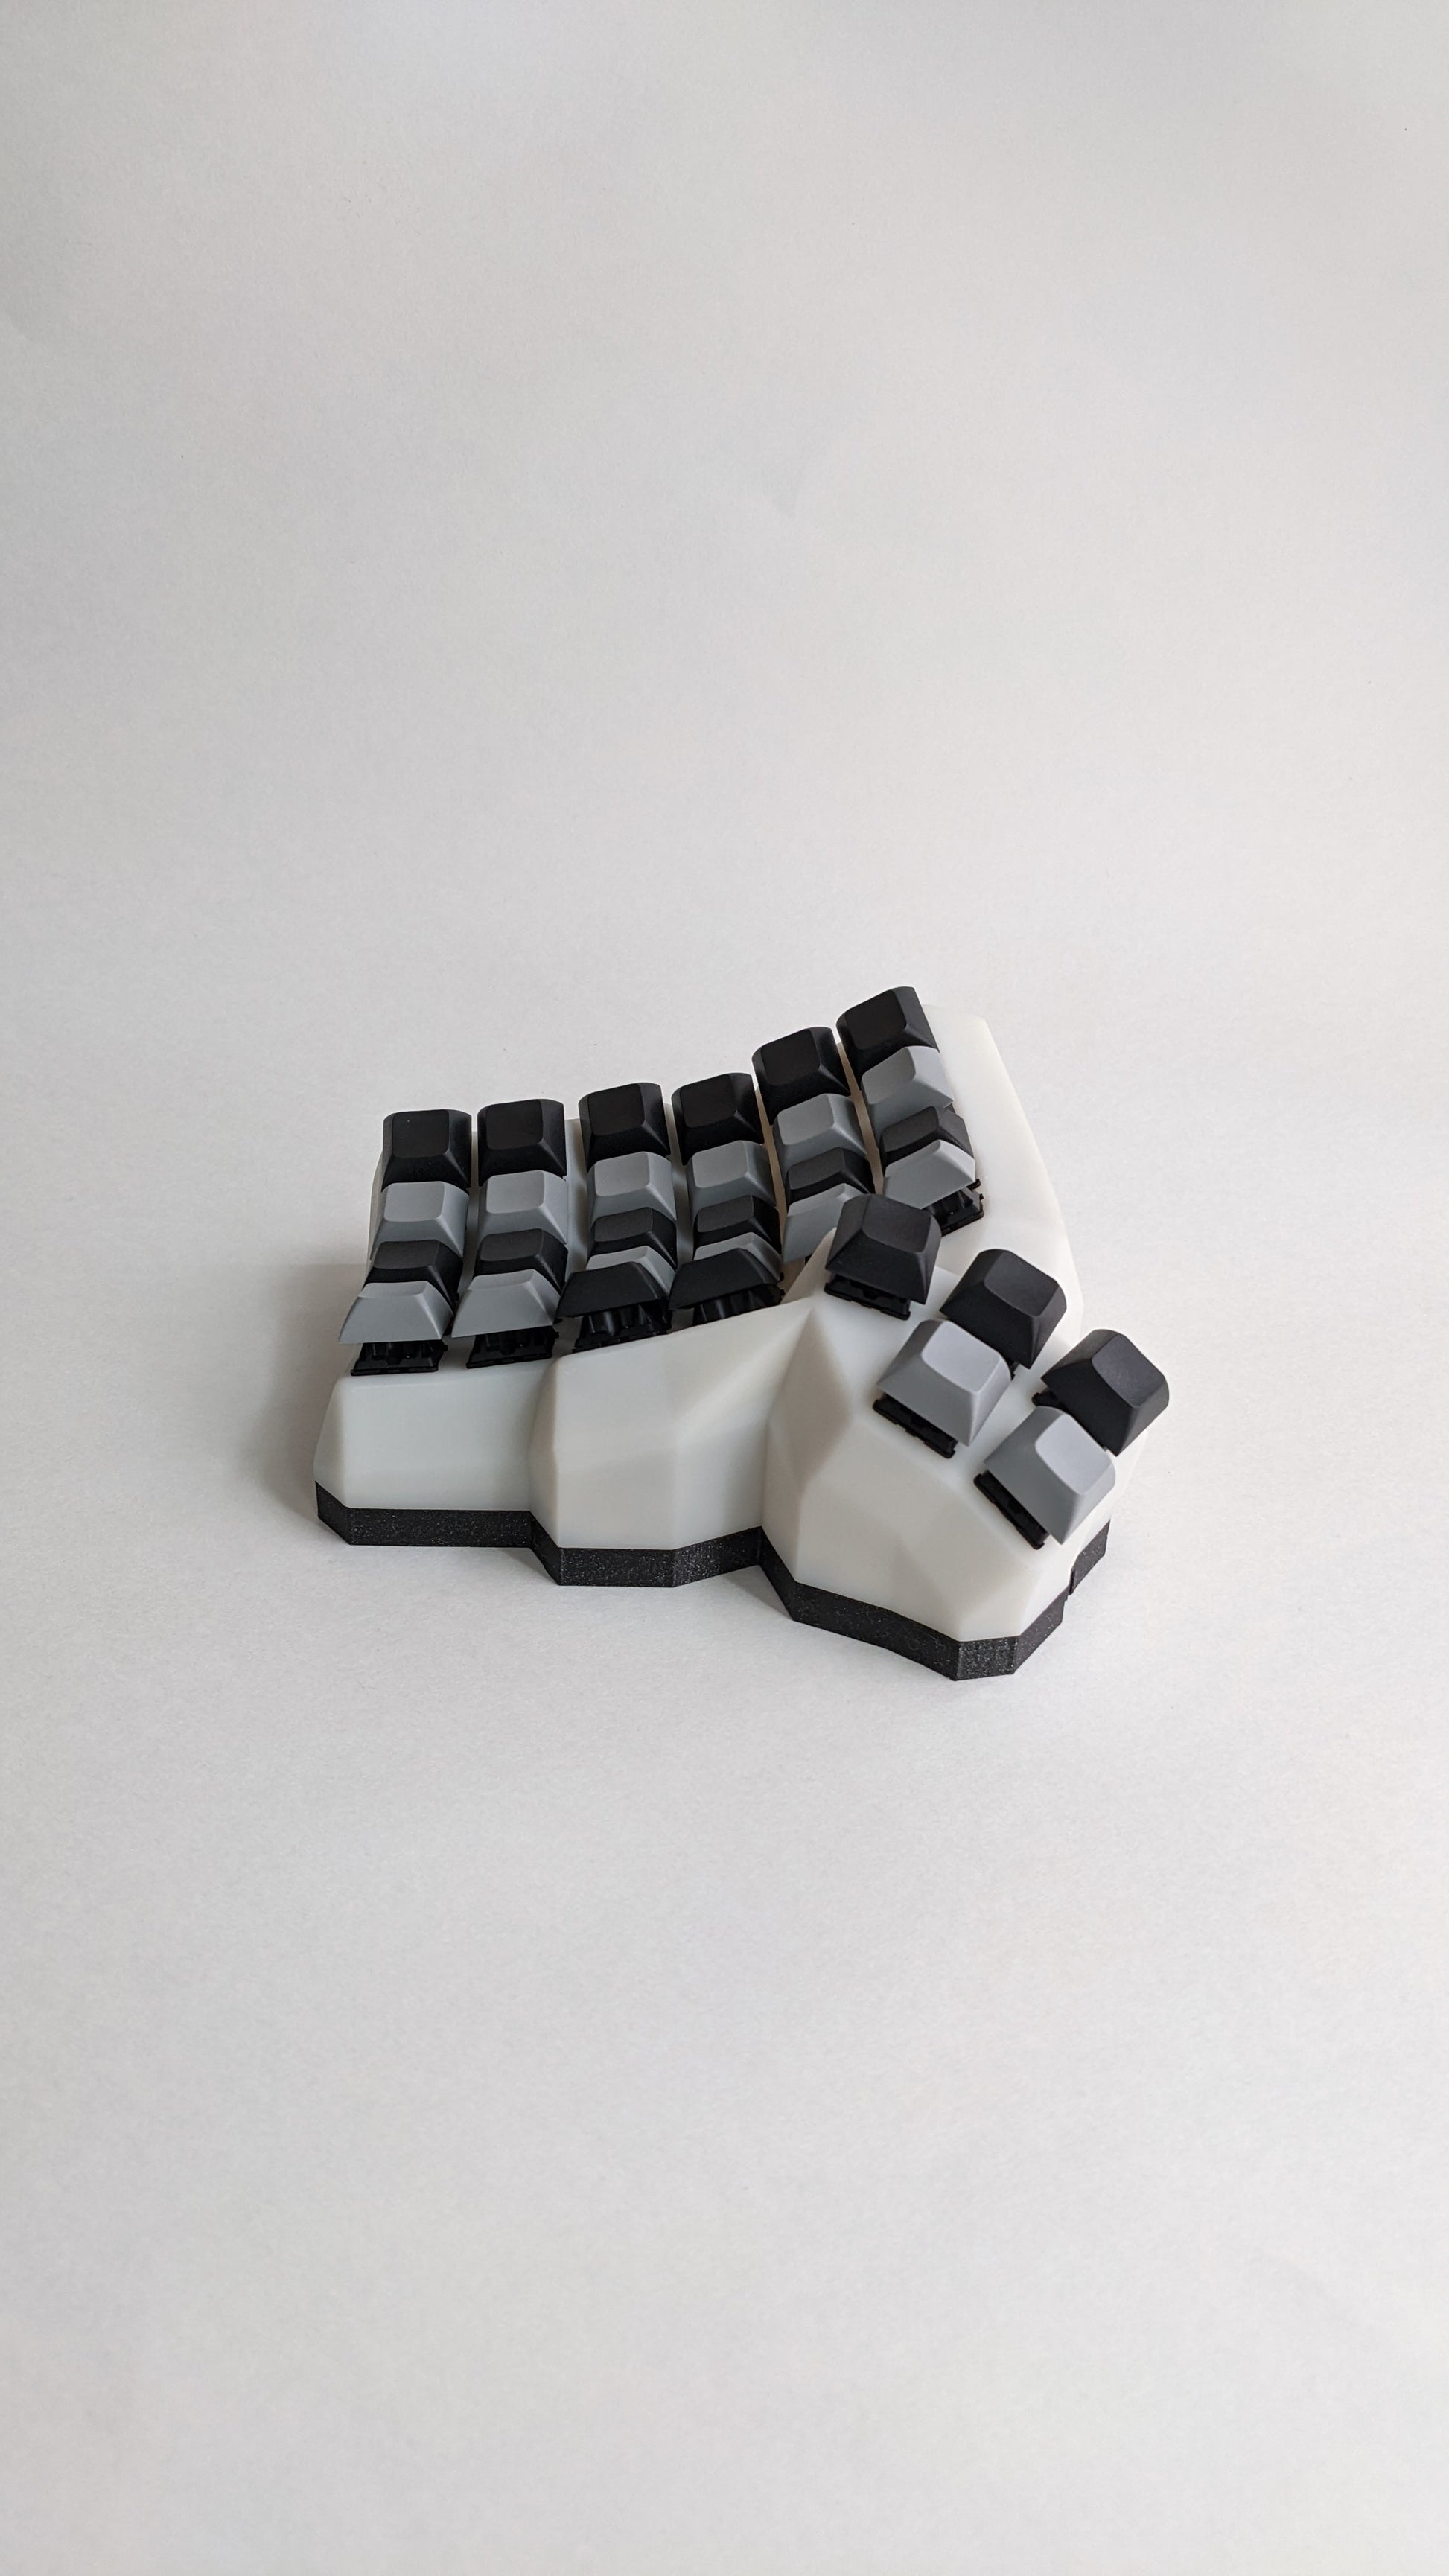 taikohub ergonomic dactyl manuform keyboard in white resin left hand side